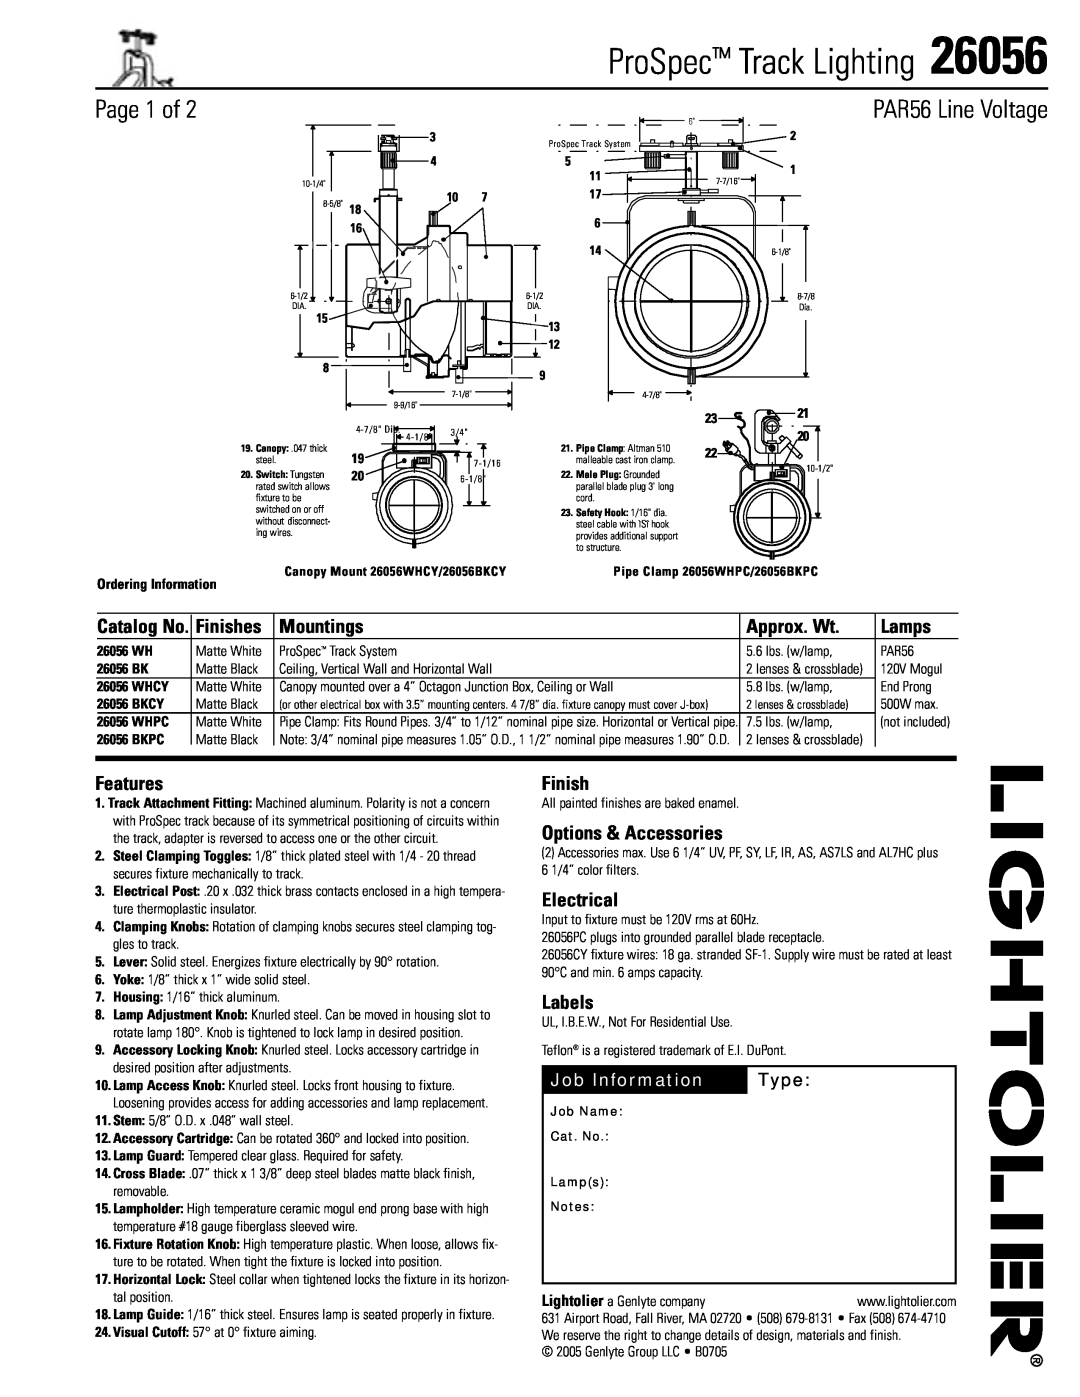 Lightolier 26056 manual ProSpec Track Lighting, PAR56 Line Voltage, Catalog No, Finishes, Mountings, Approx. Wt, Lamps 